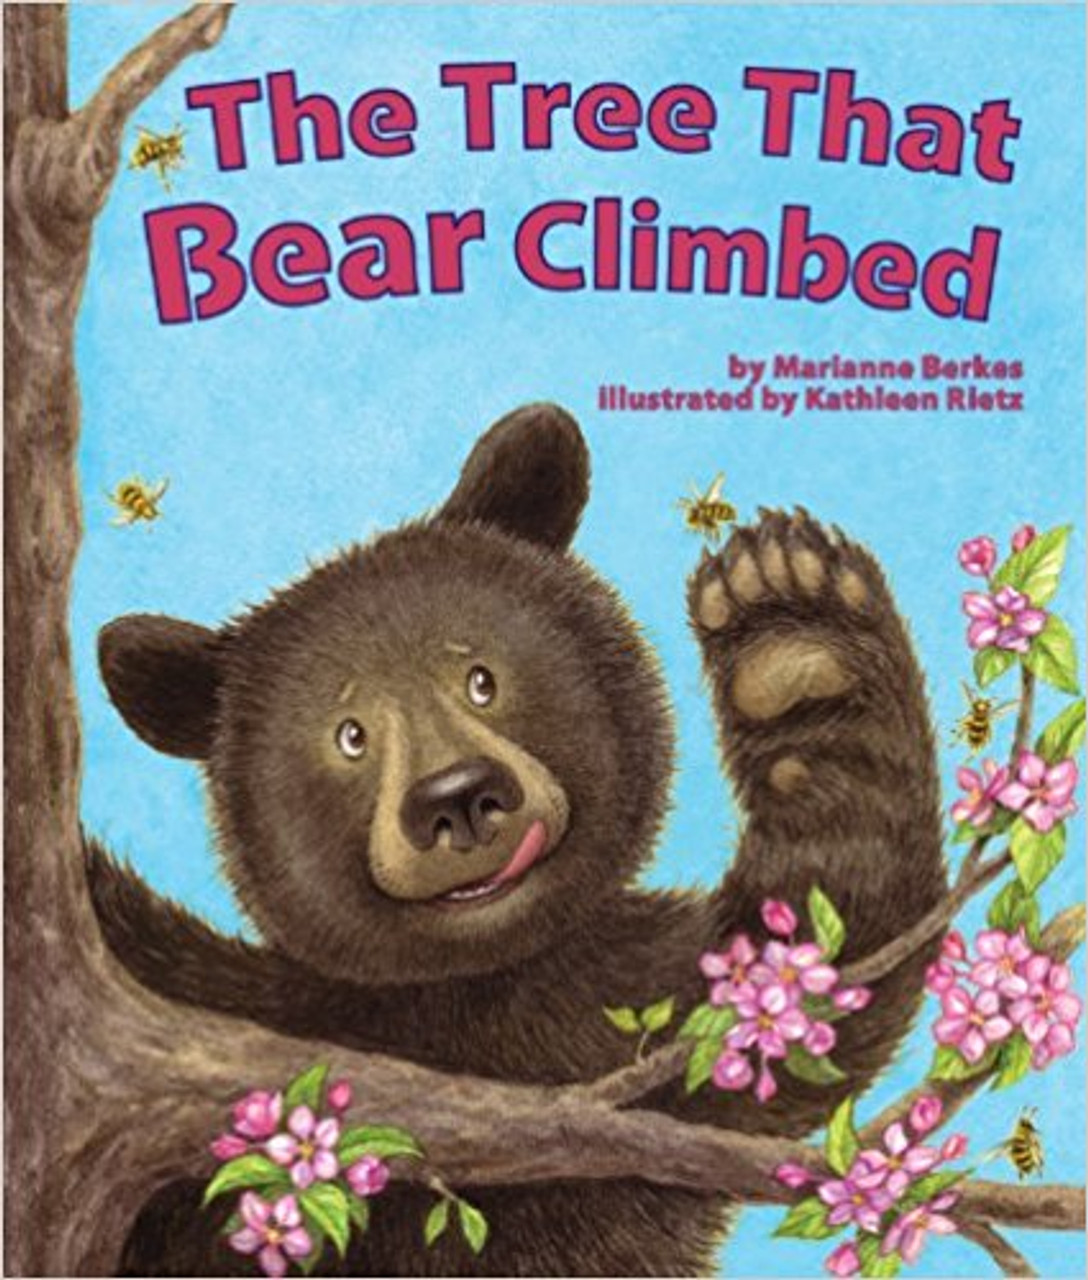 Tree That Bear Climbed, The by Marianne Berkes